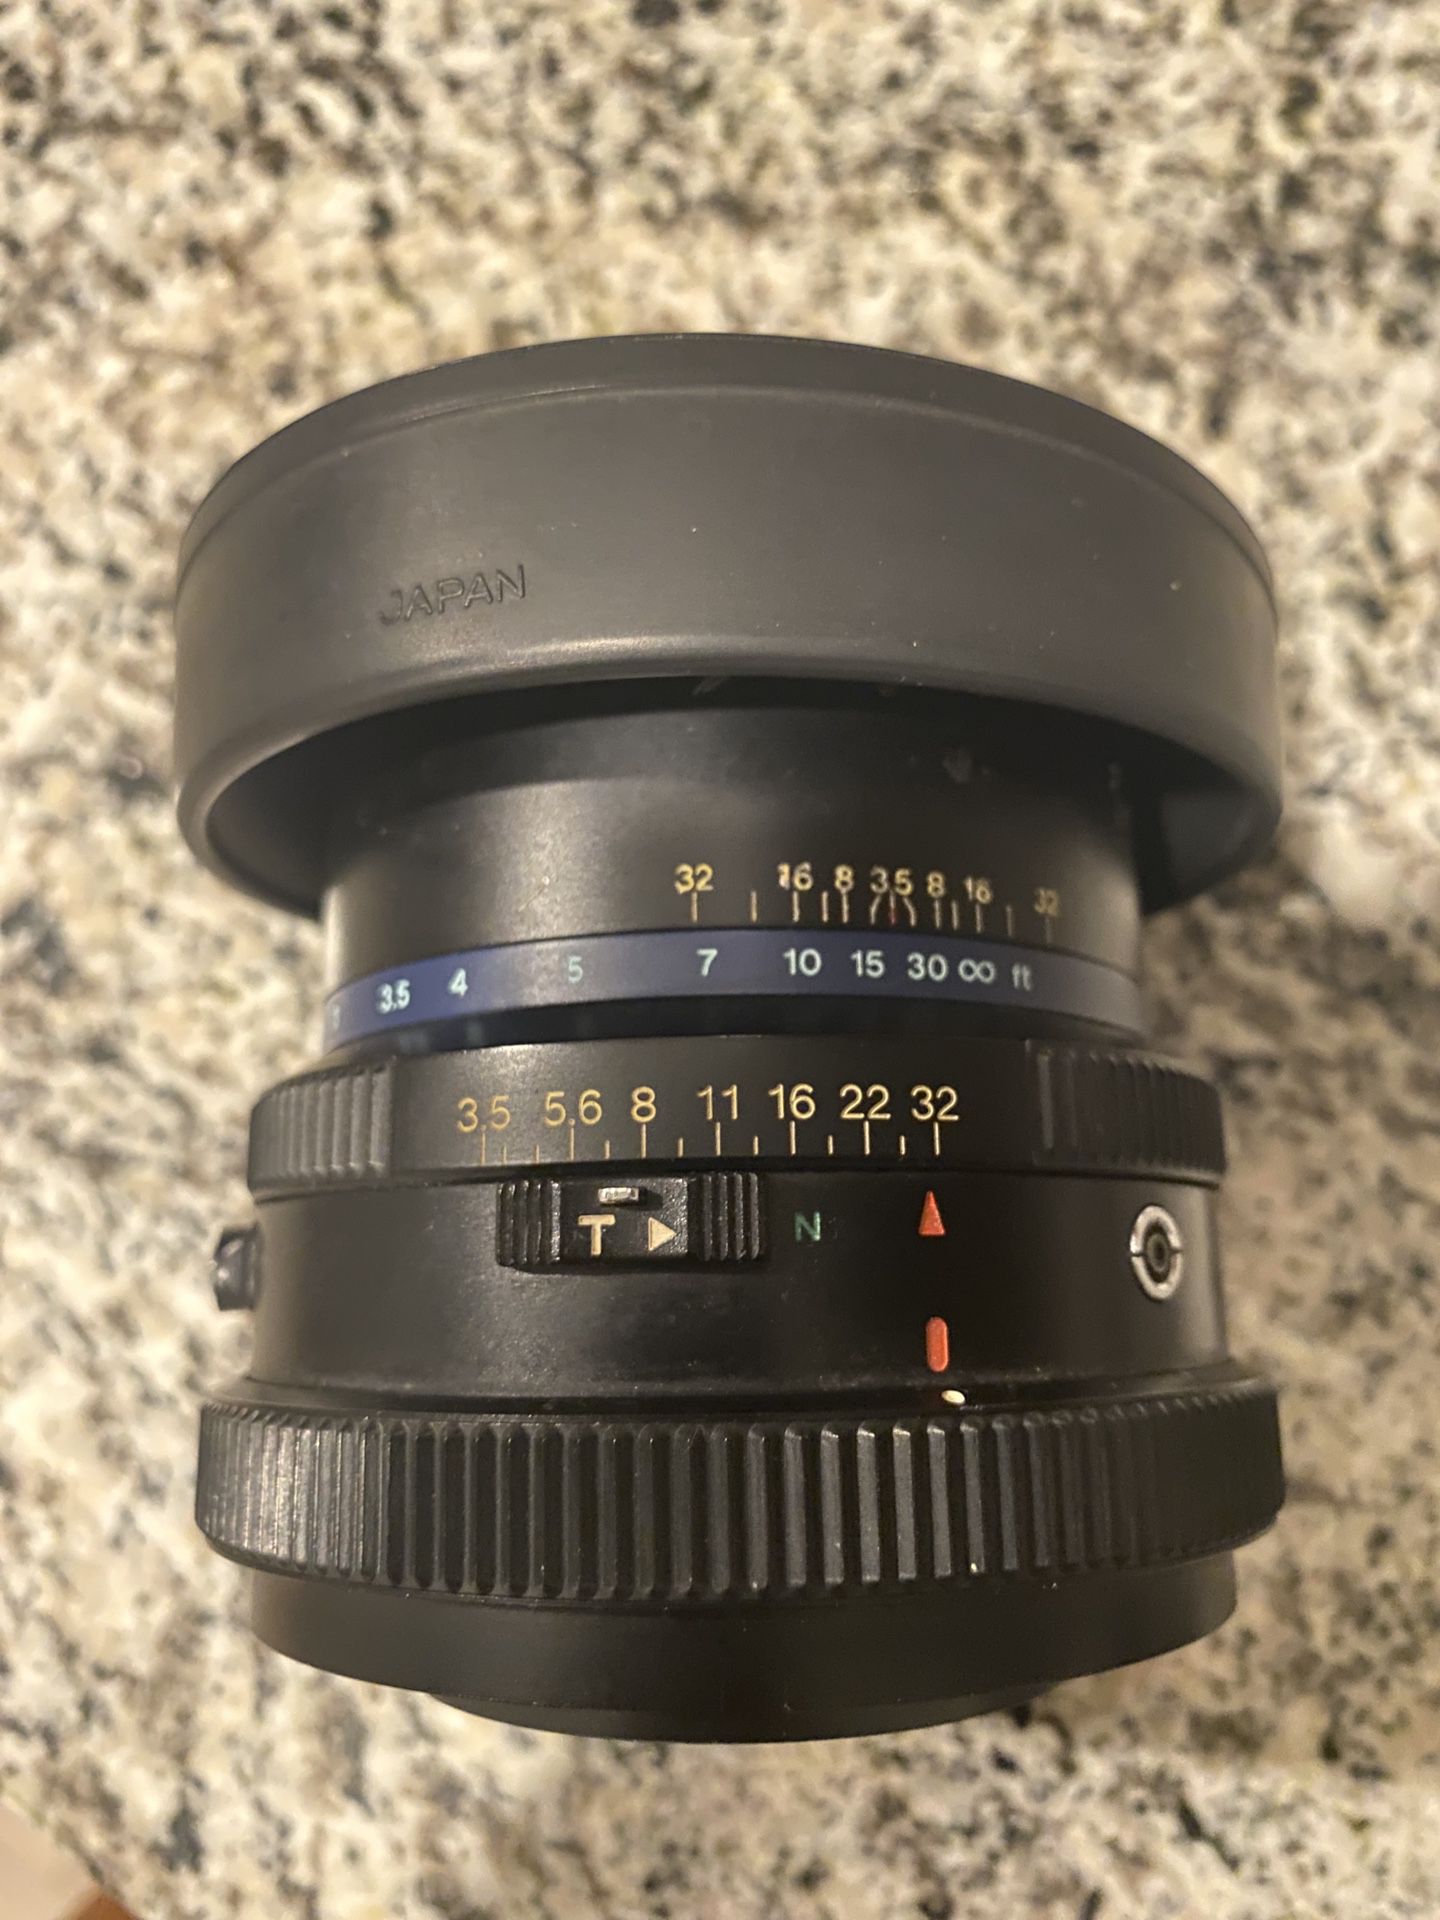 90mm Mamiya Lens F/3.5 